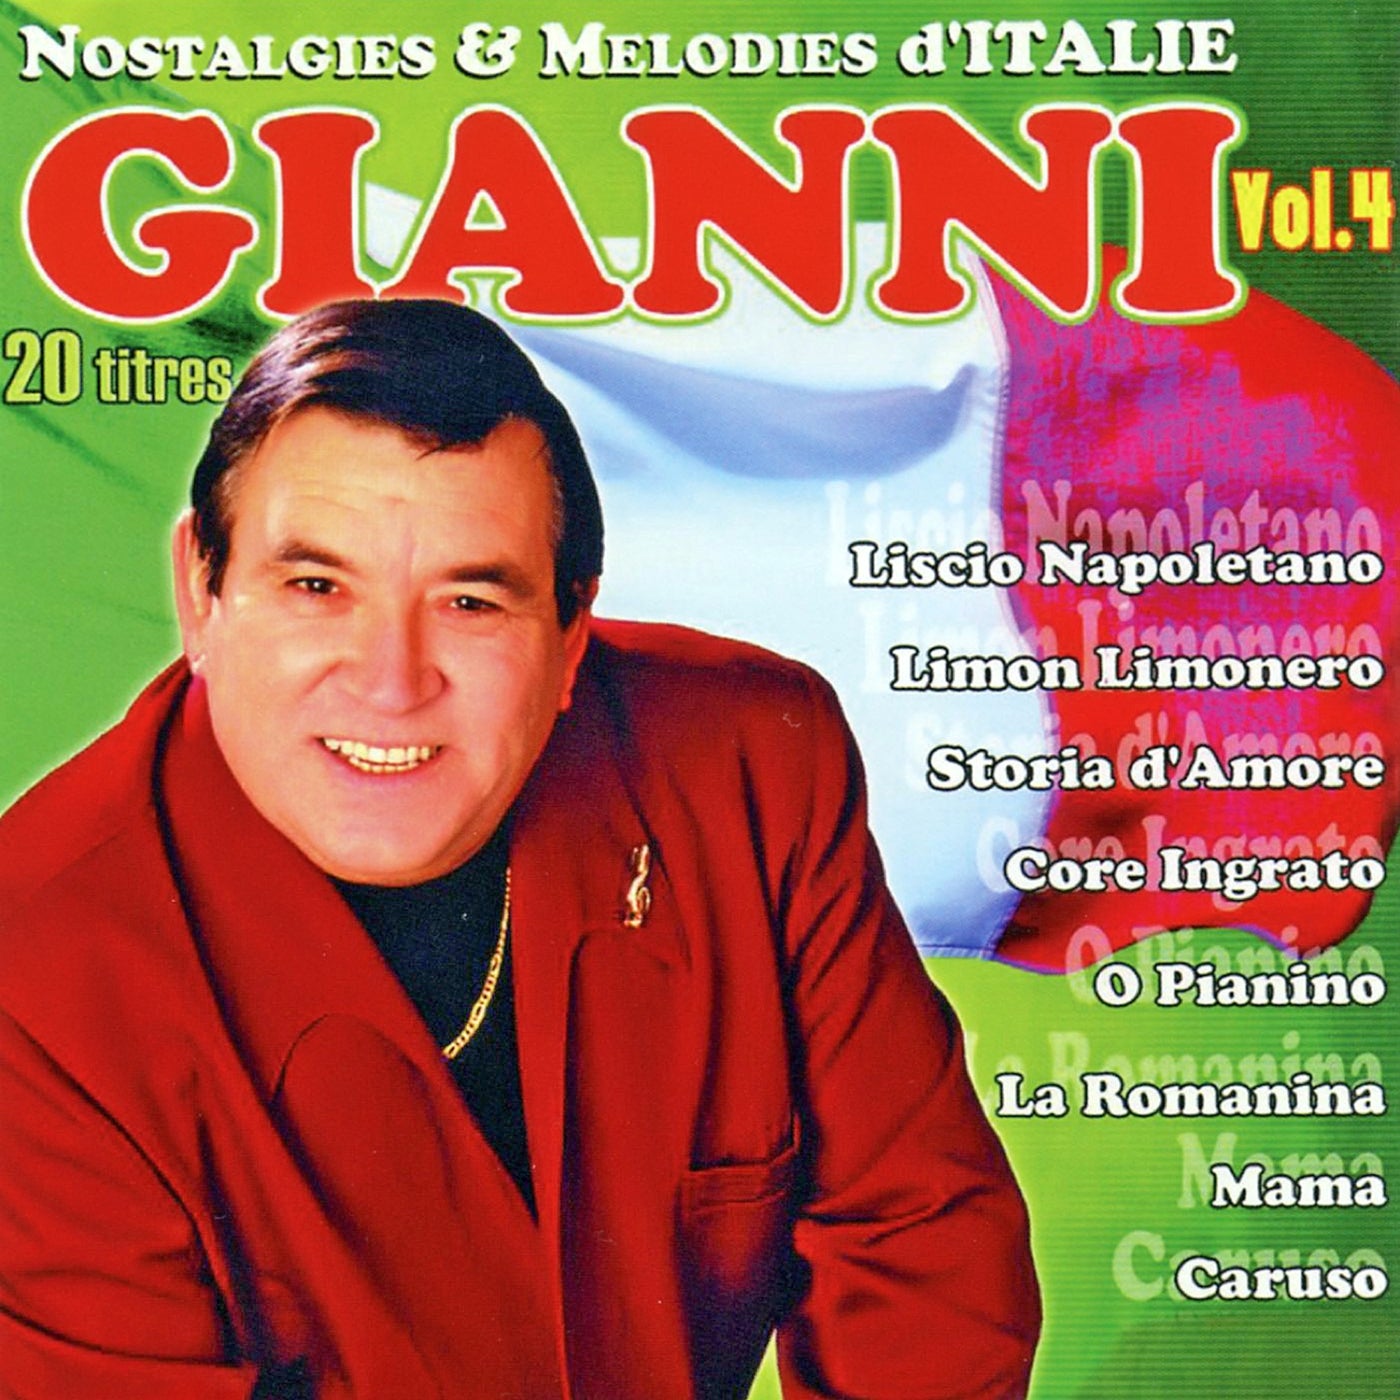 Nostalgies Et Mélodies d'Italie Vol. 4 by Gianni on Beatsource